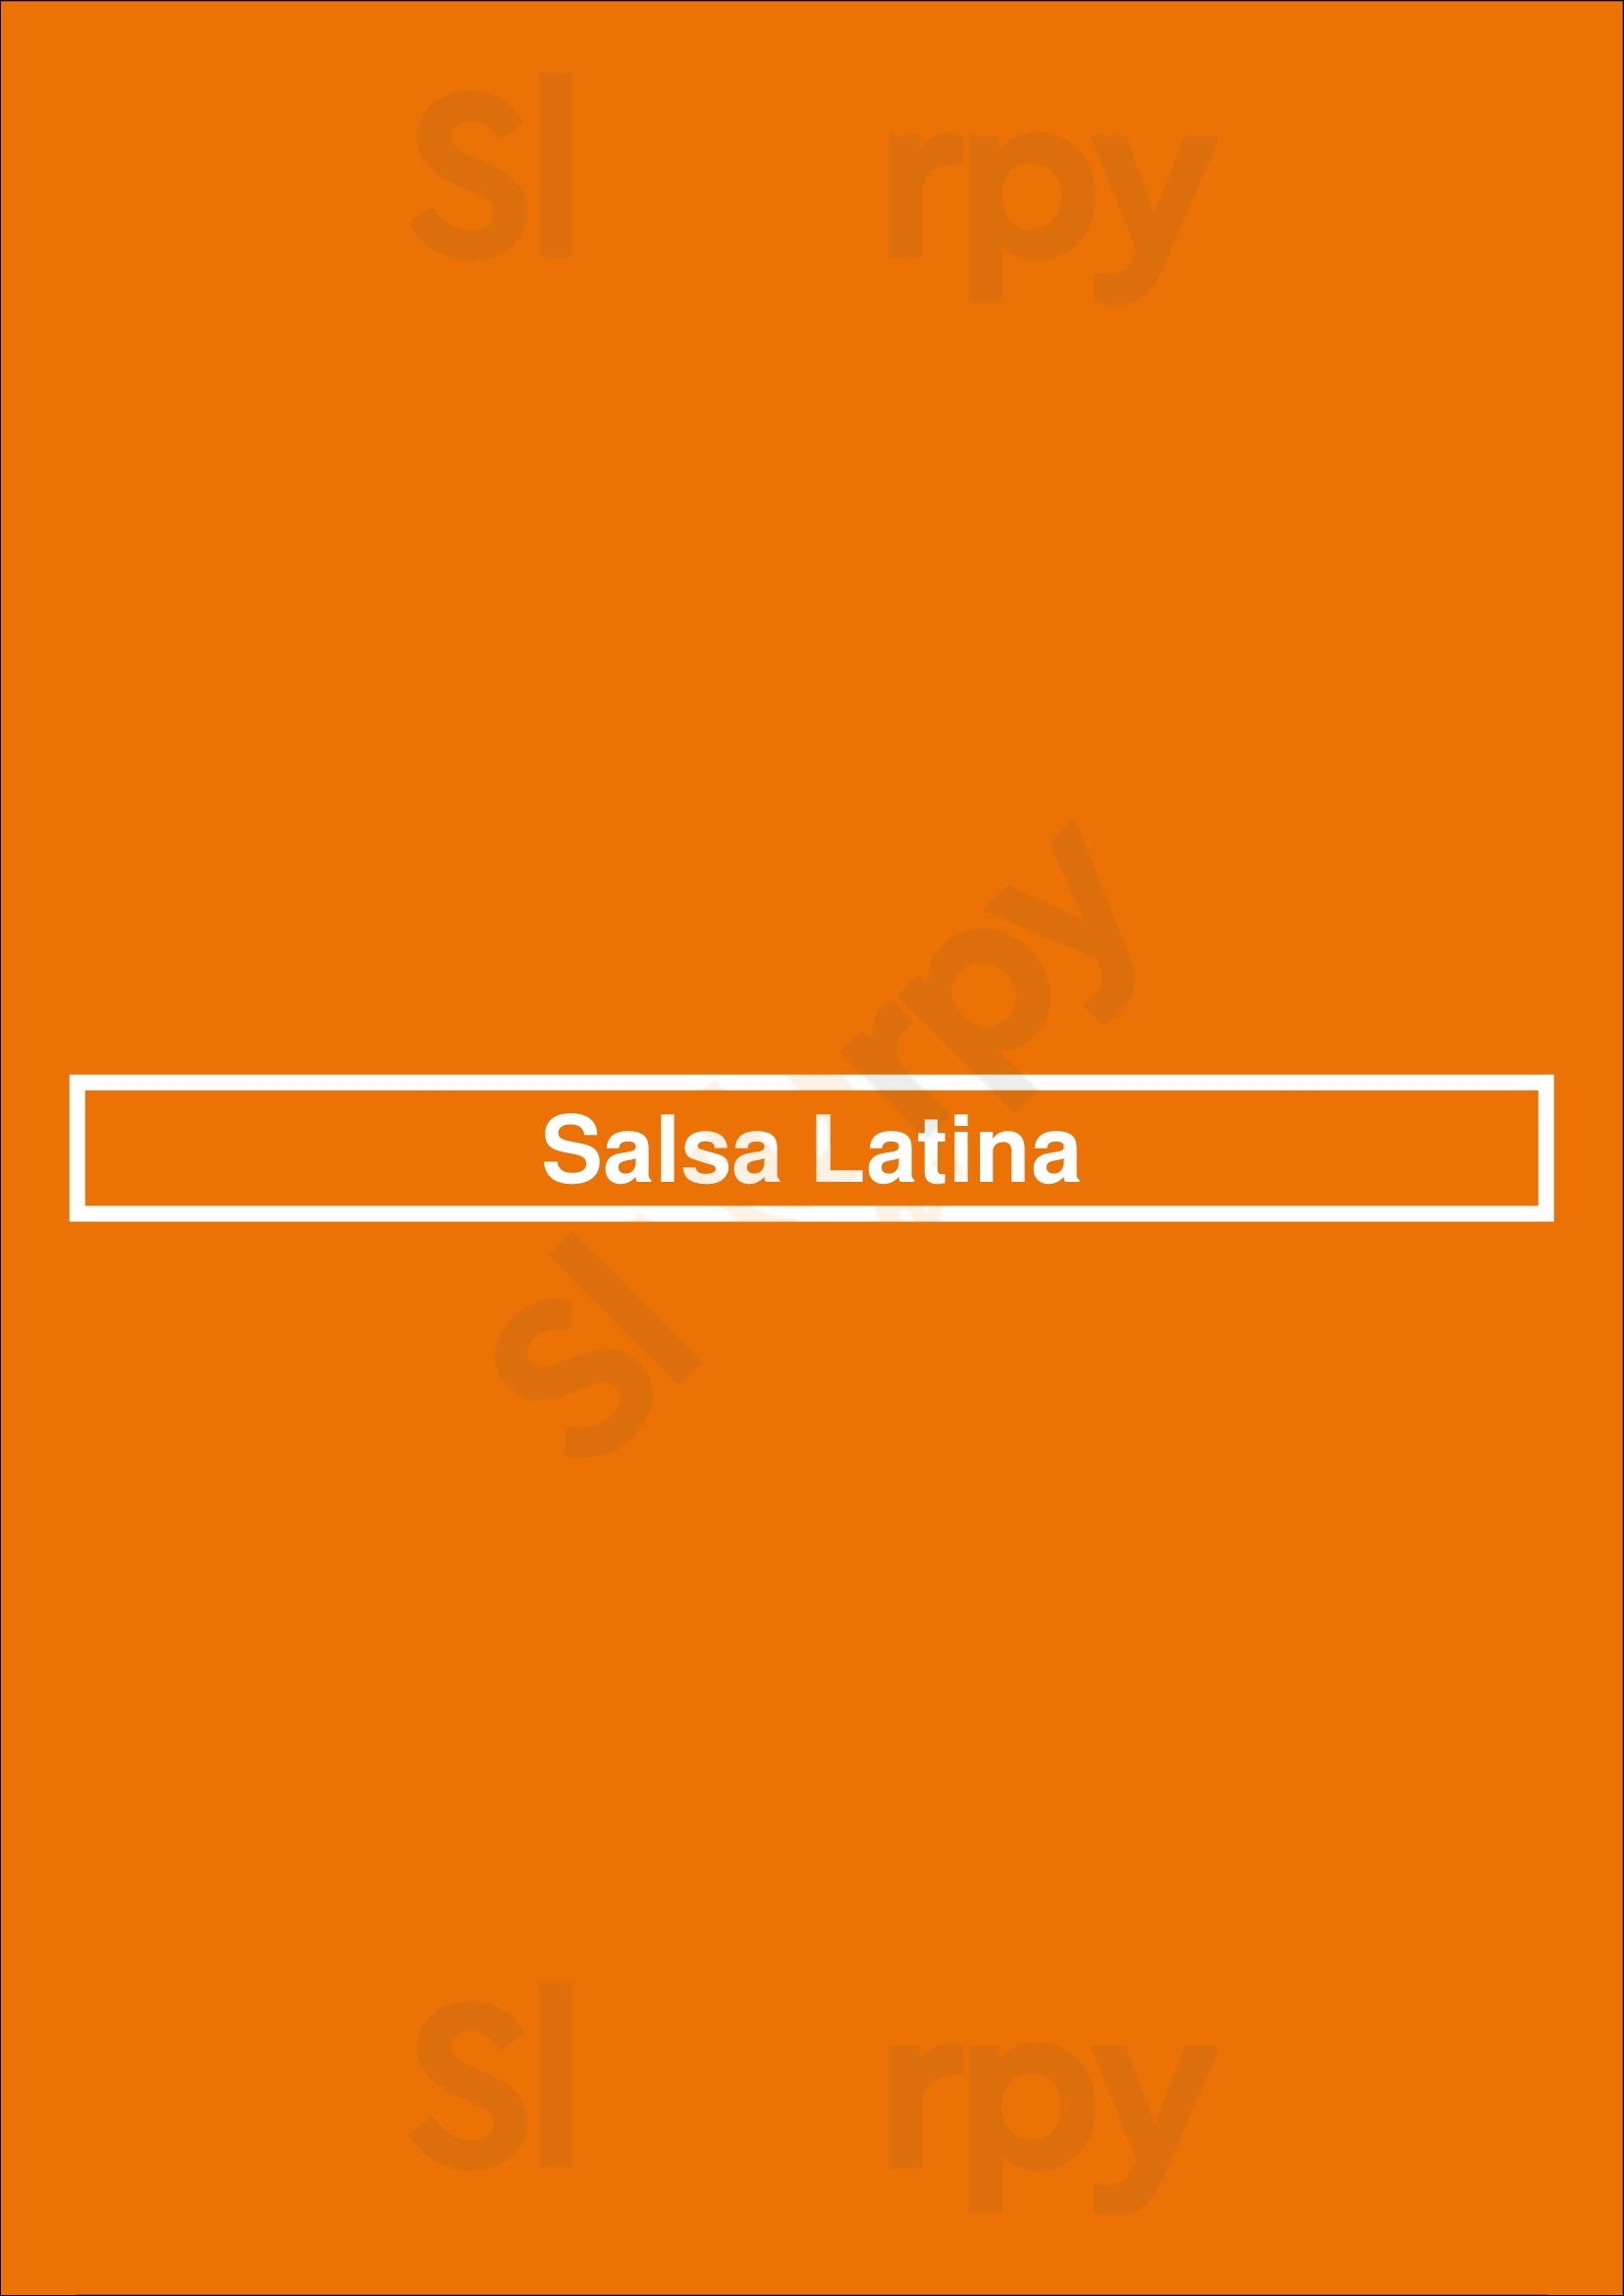 Salsa Latina Albany Menu - 1